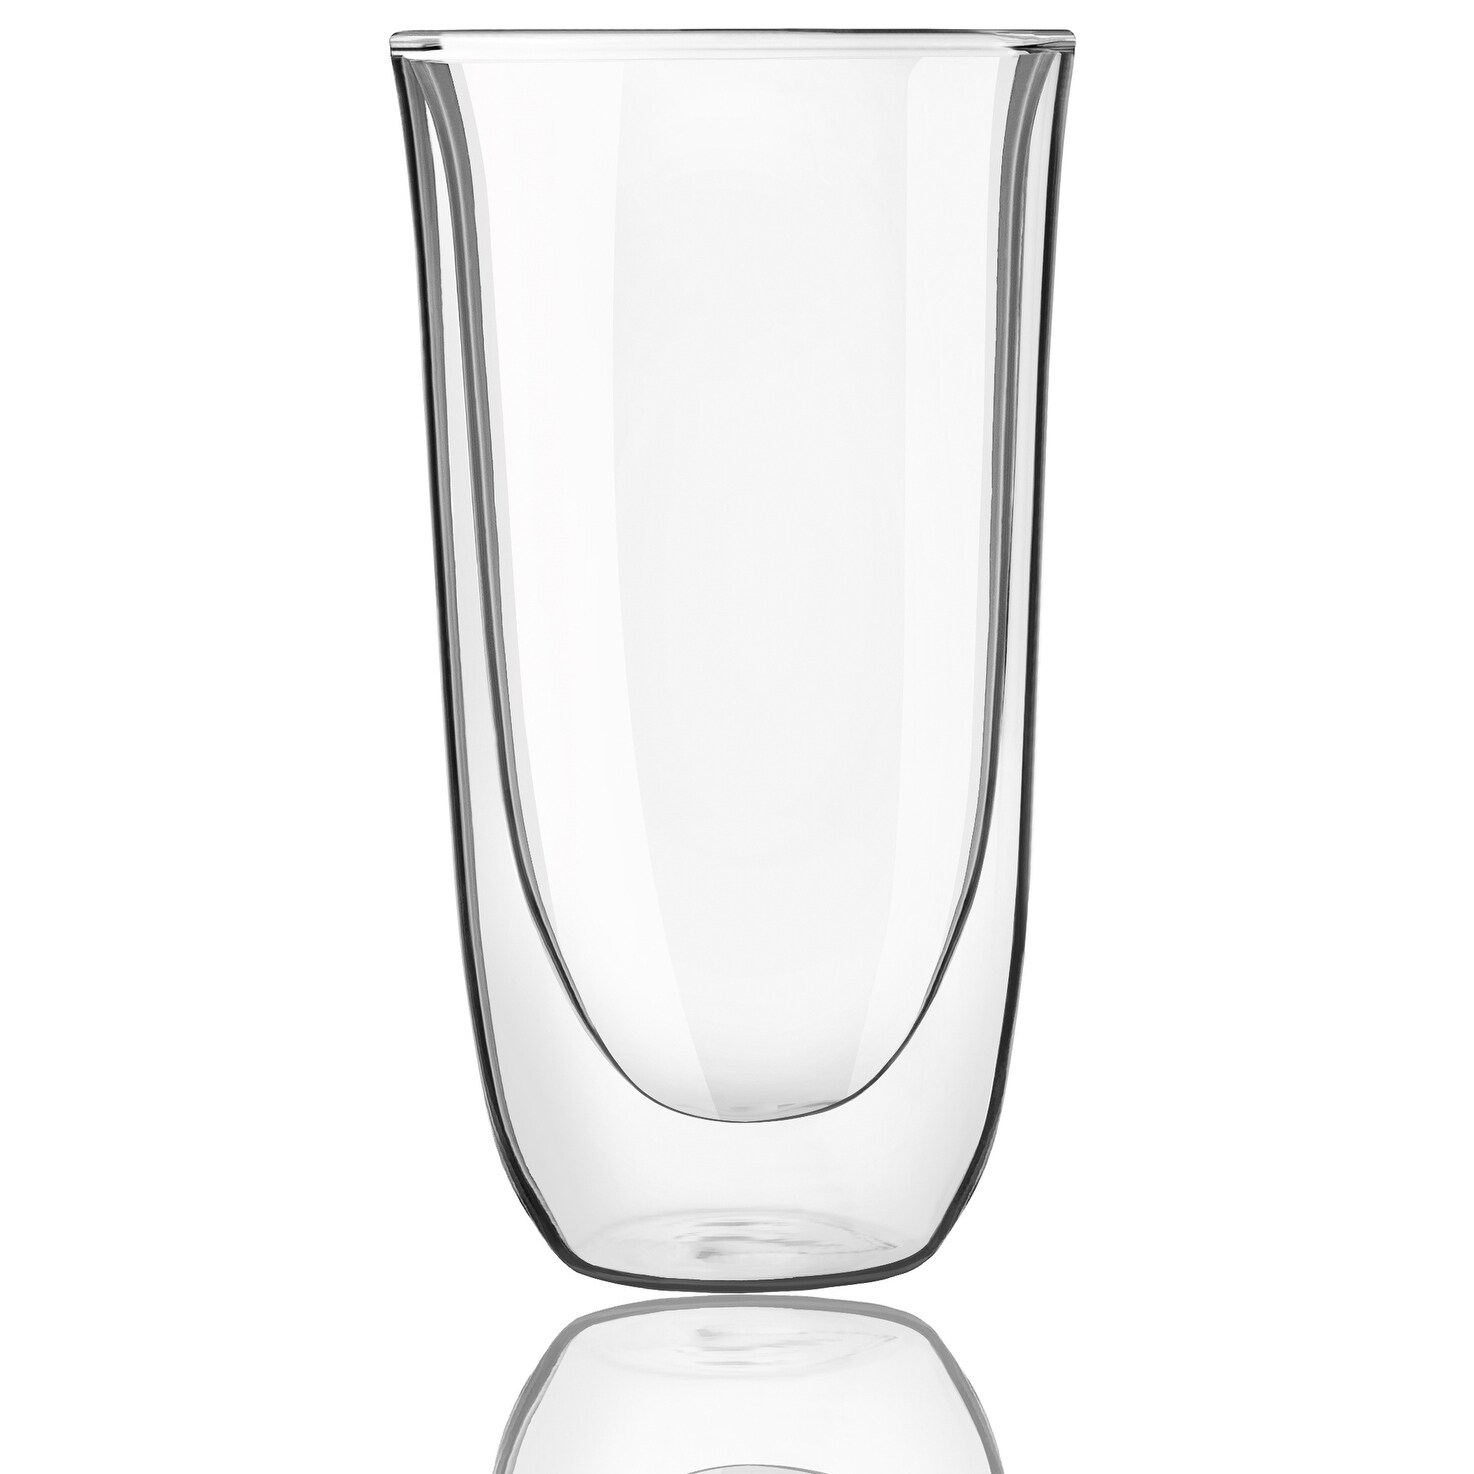 https://ak1.ostkcdn.com/images/products/21234405/JoyJolt-Spike-Double-Wall-Glasses-13.5-Ounce-Cocktail-Drinkware-Glass-set-of-2-1659ecae-9e55-41ab-83ac-5160b3186888.jpg